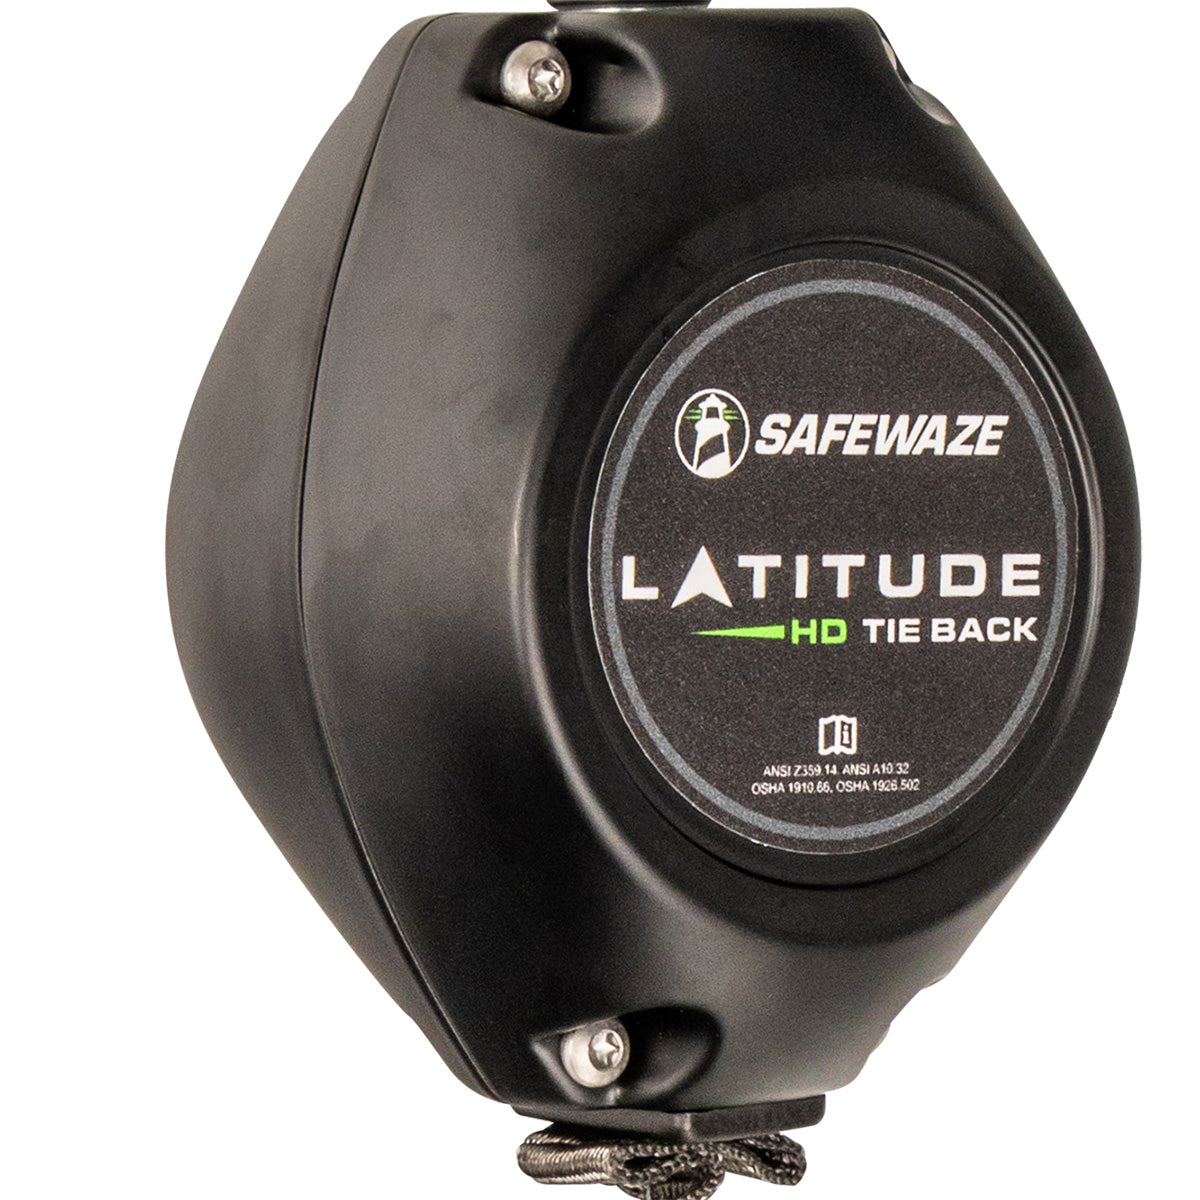 Latitude HD 7' Single Web SRL: Carabiner, 20" Tie-Back, Tie-Back Snap Hook                                                     